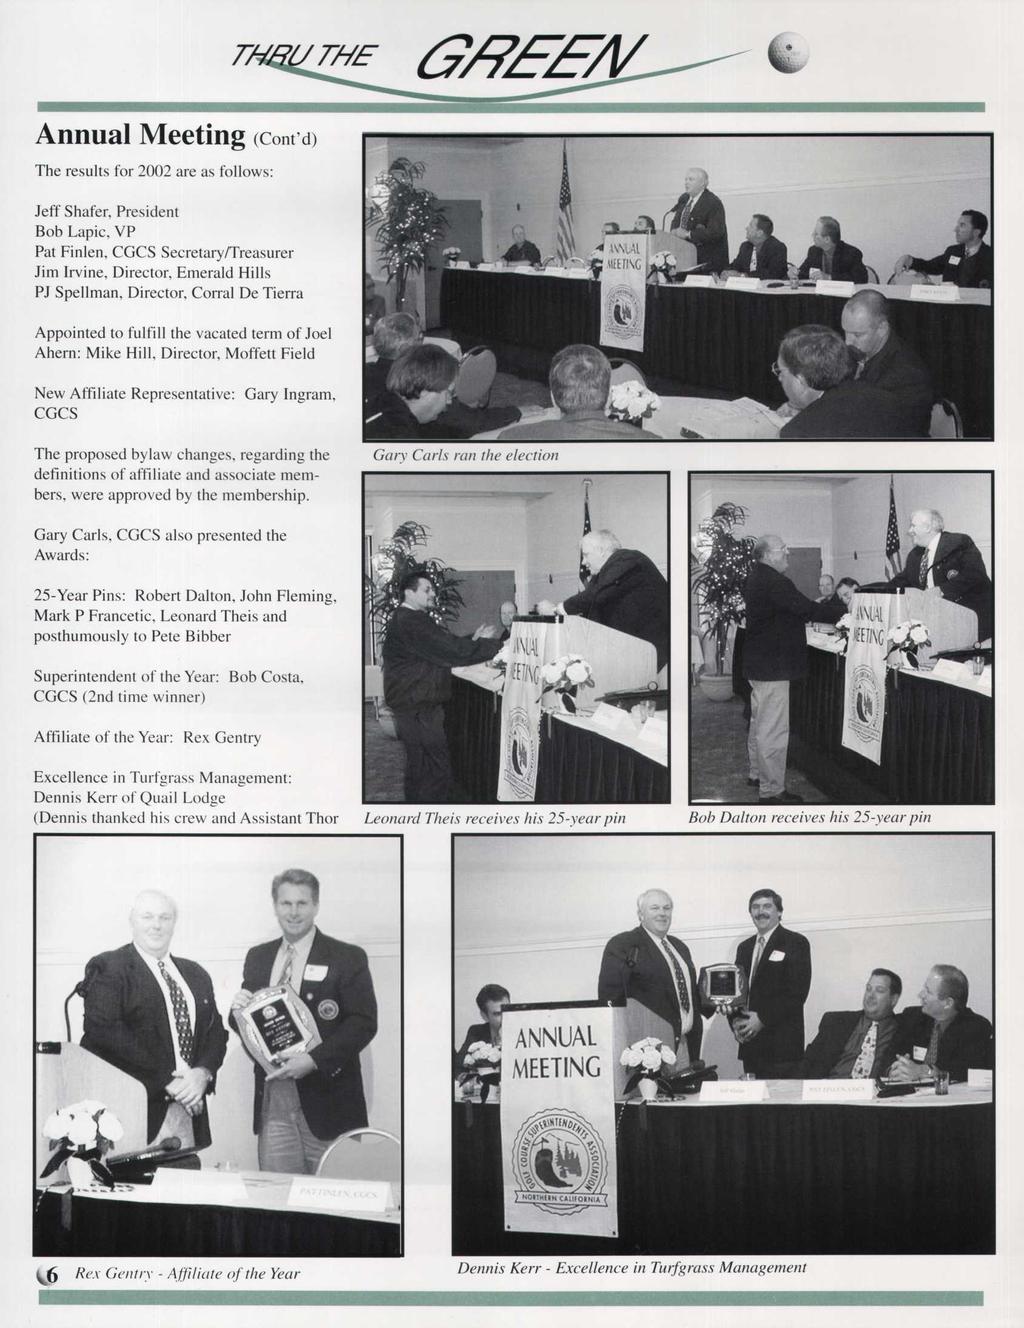 Annual Meeting (Cont'd) The results for 2002 are as follows: Jeff Shafer, President Bob Lapic, VP Pat Finlen, CGCS Secretary/Treasurer Jim Irvine, Director, Emerald Hills PJ Spellman, Director,